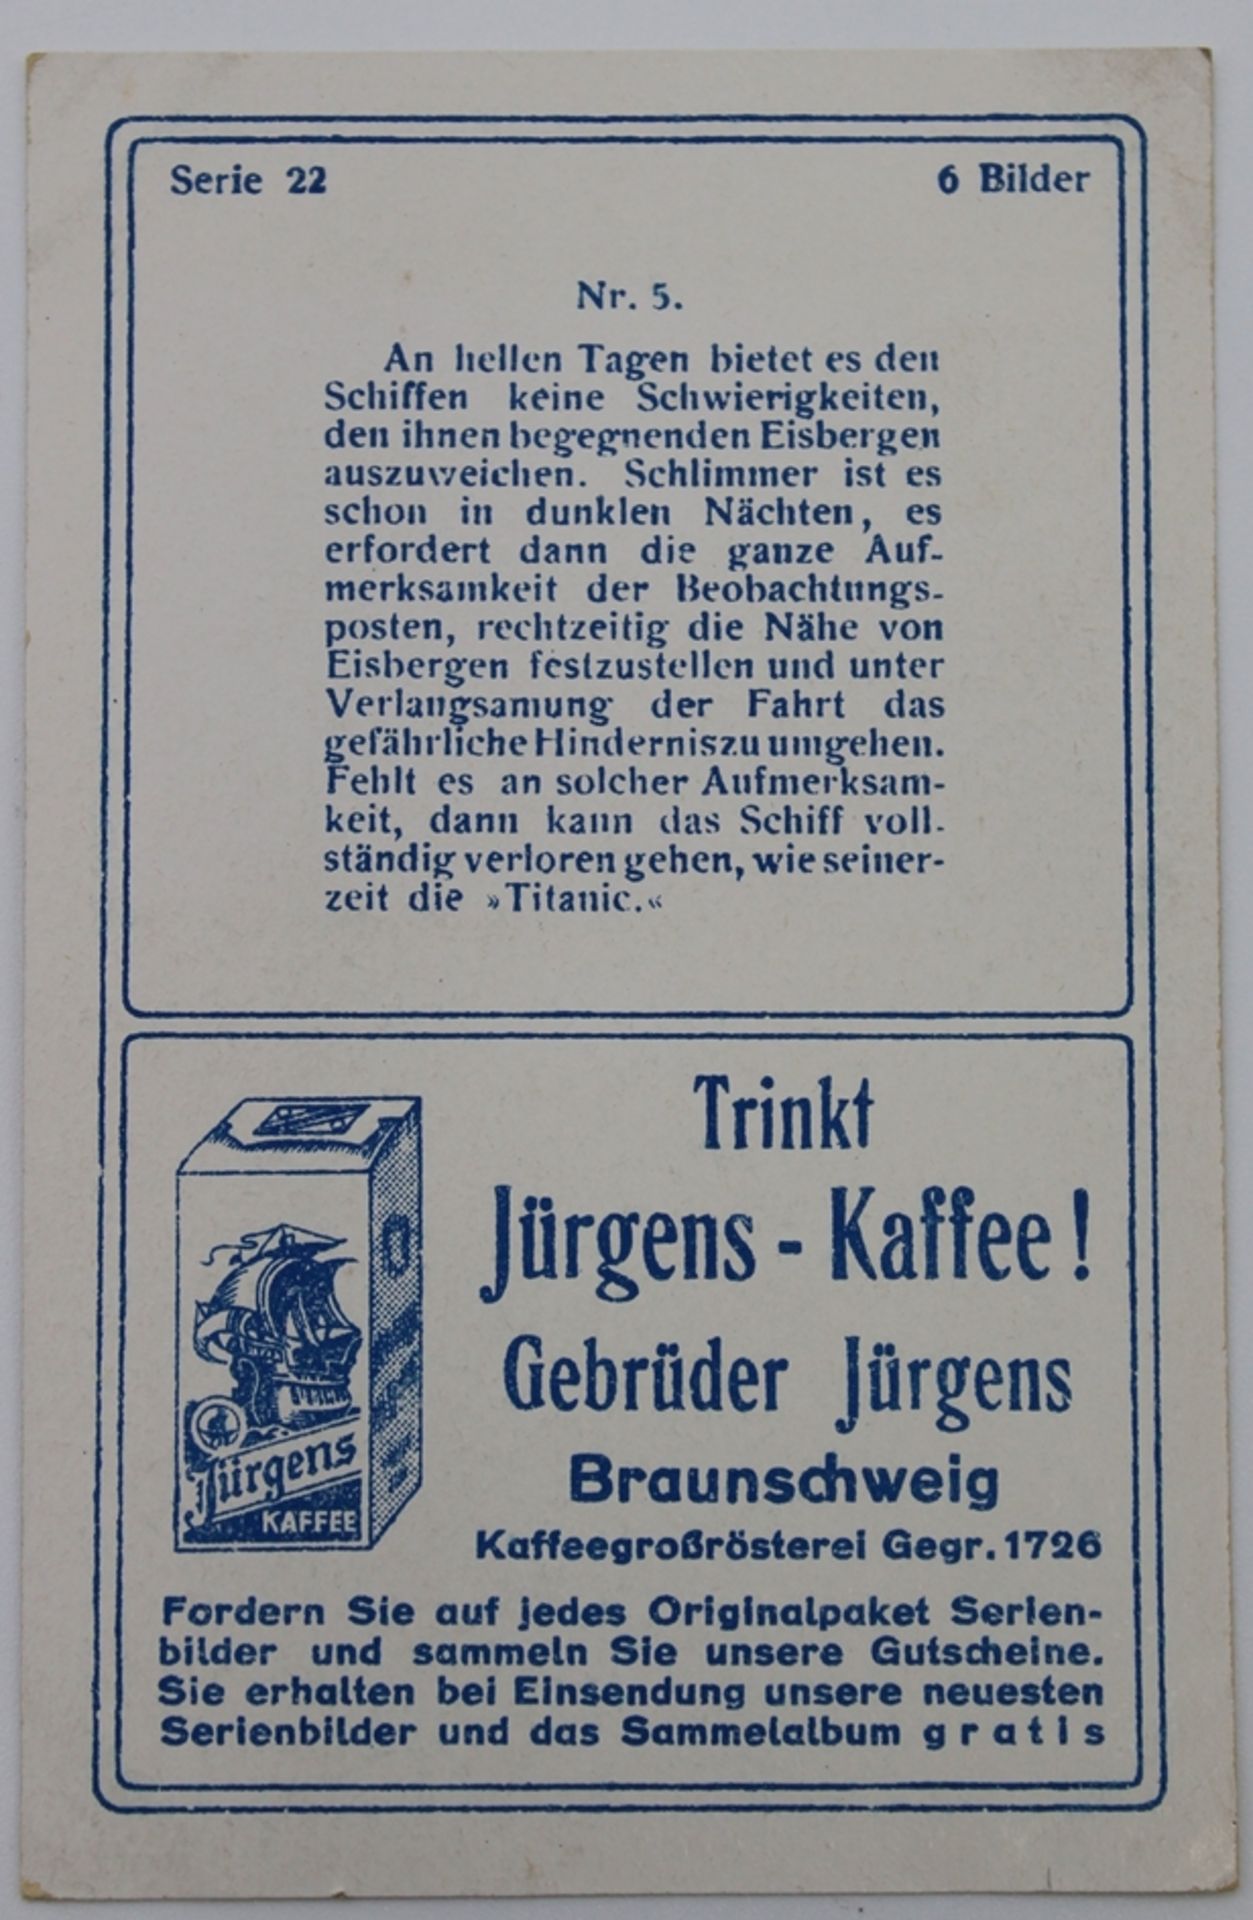 Sammelbilder-Album, Jürgens Kaffee, nicht komplett befüllt, - Bild 5 aus 7